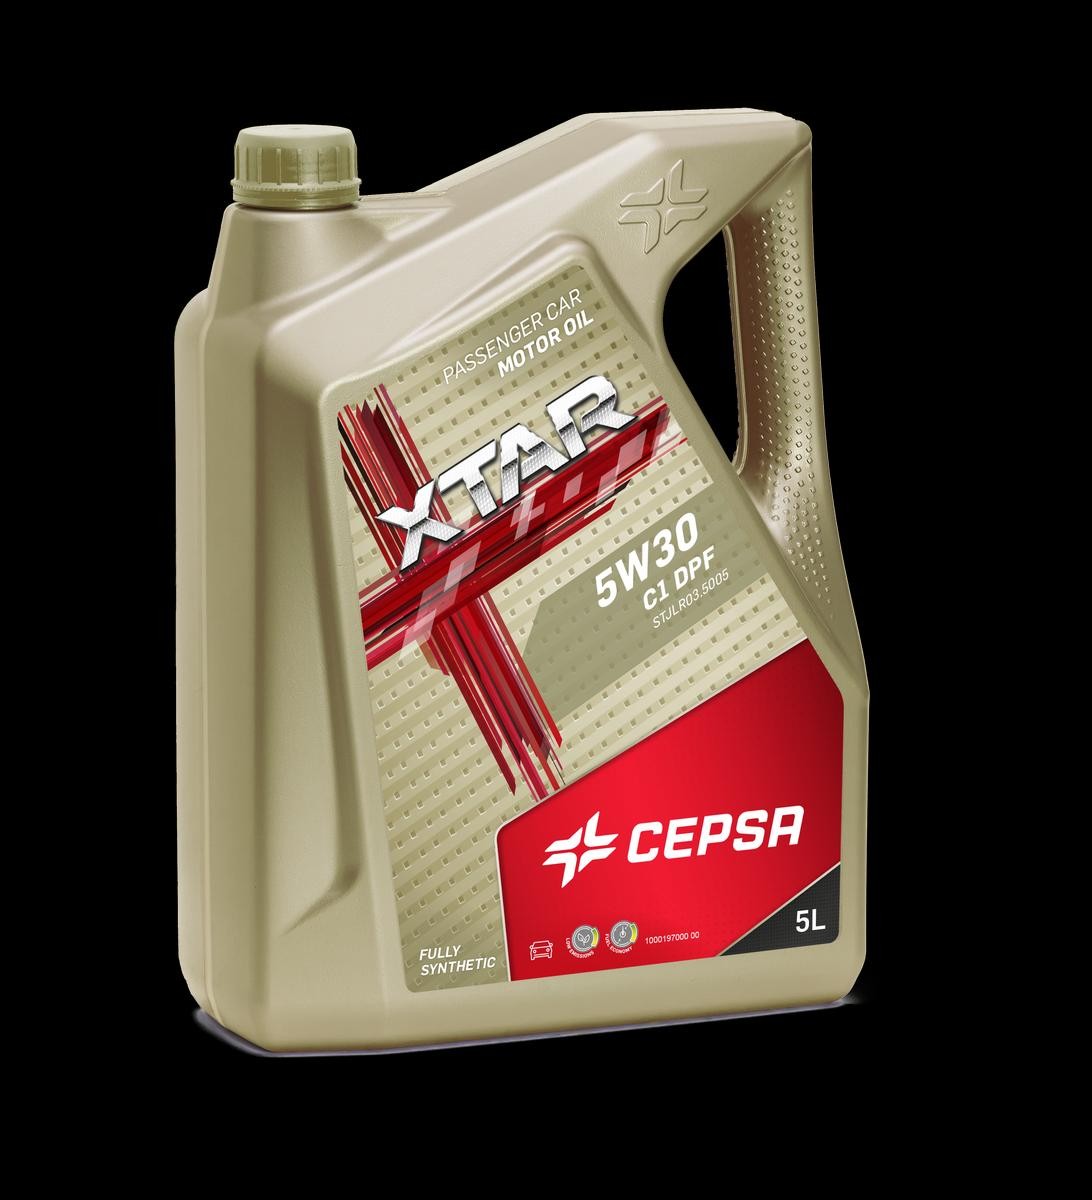 CEPSA XTAR, C1 DPF 5W-30, 5l, Synthetic, Full Synthetic Oil Motor oil 513913090 buy